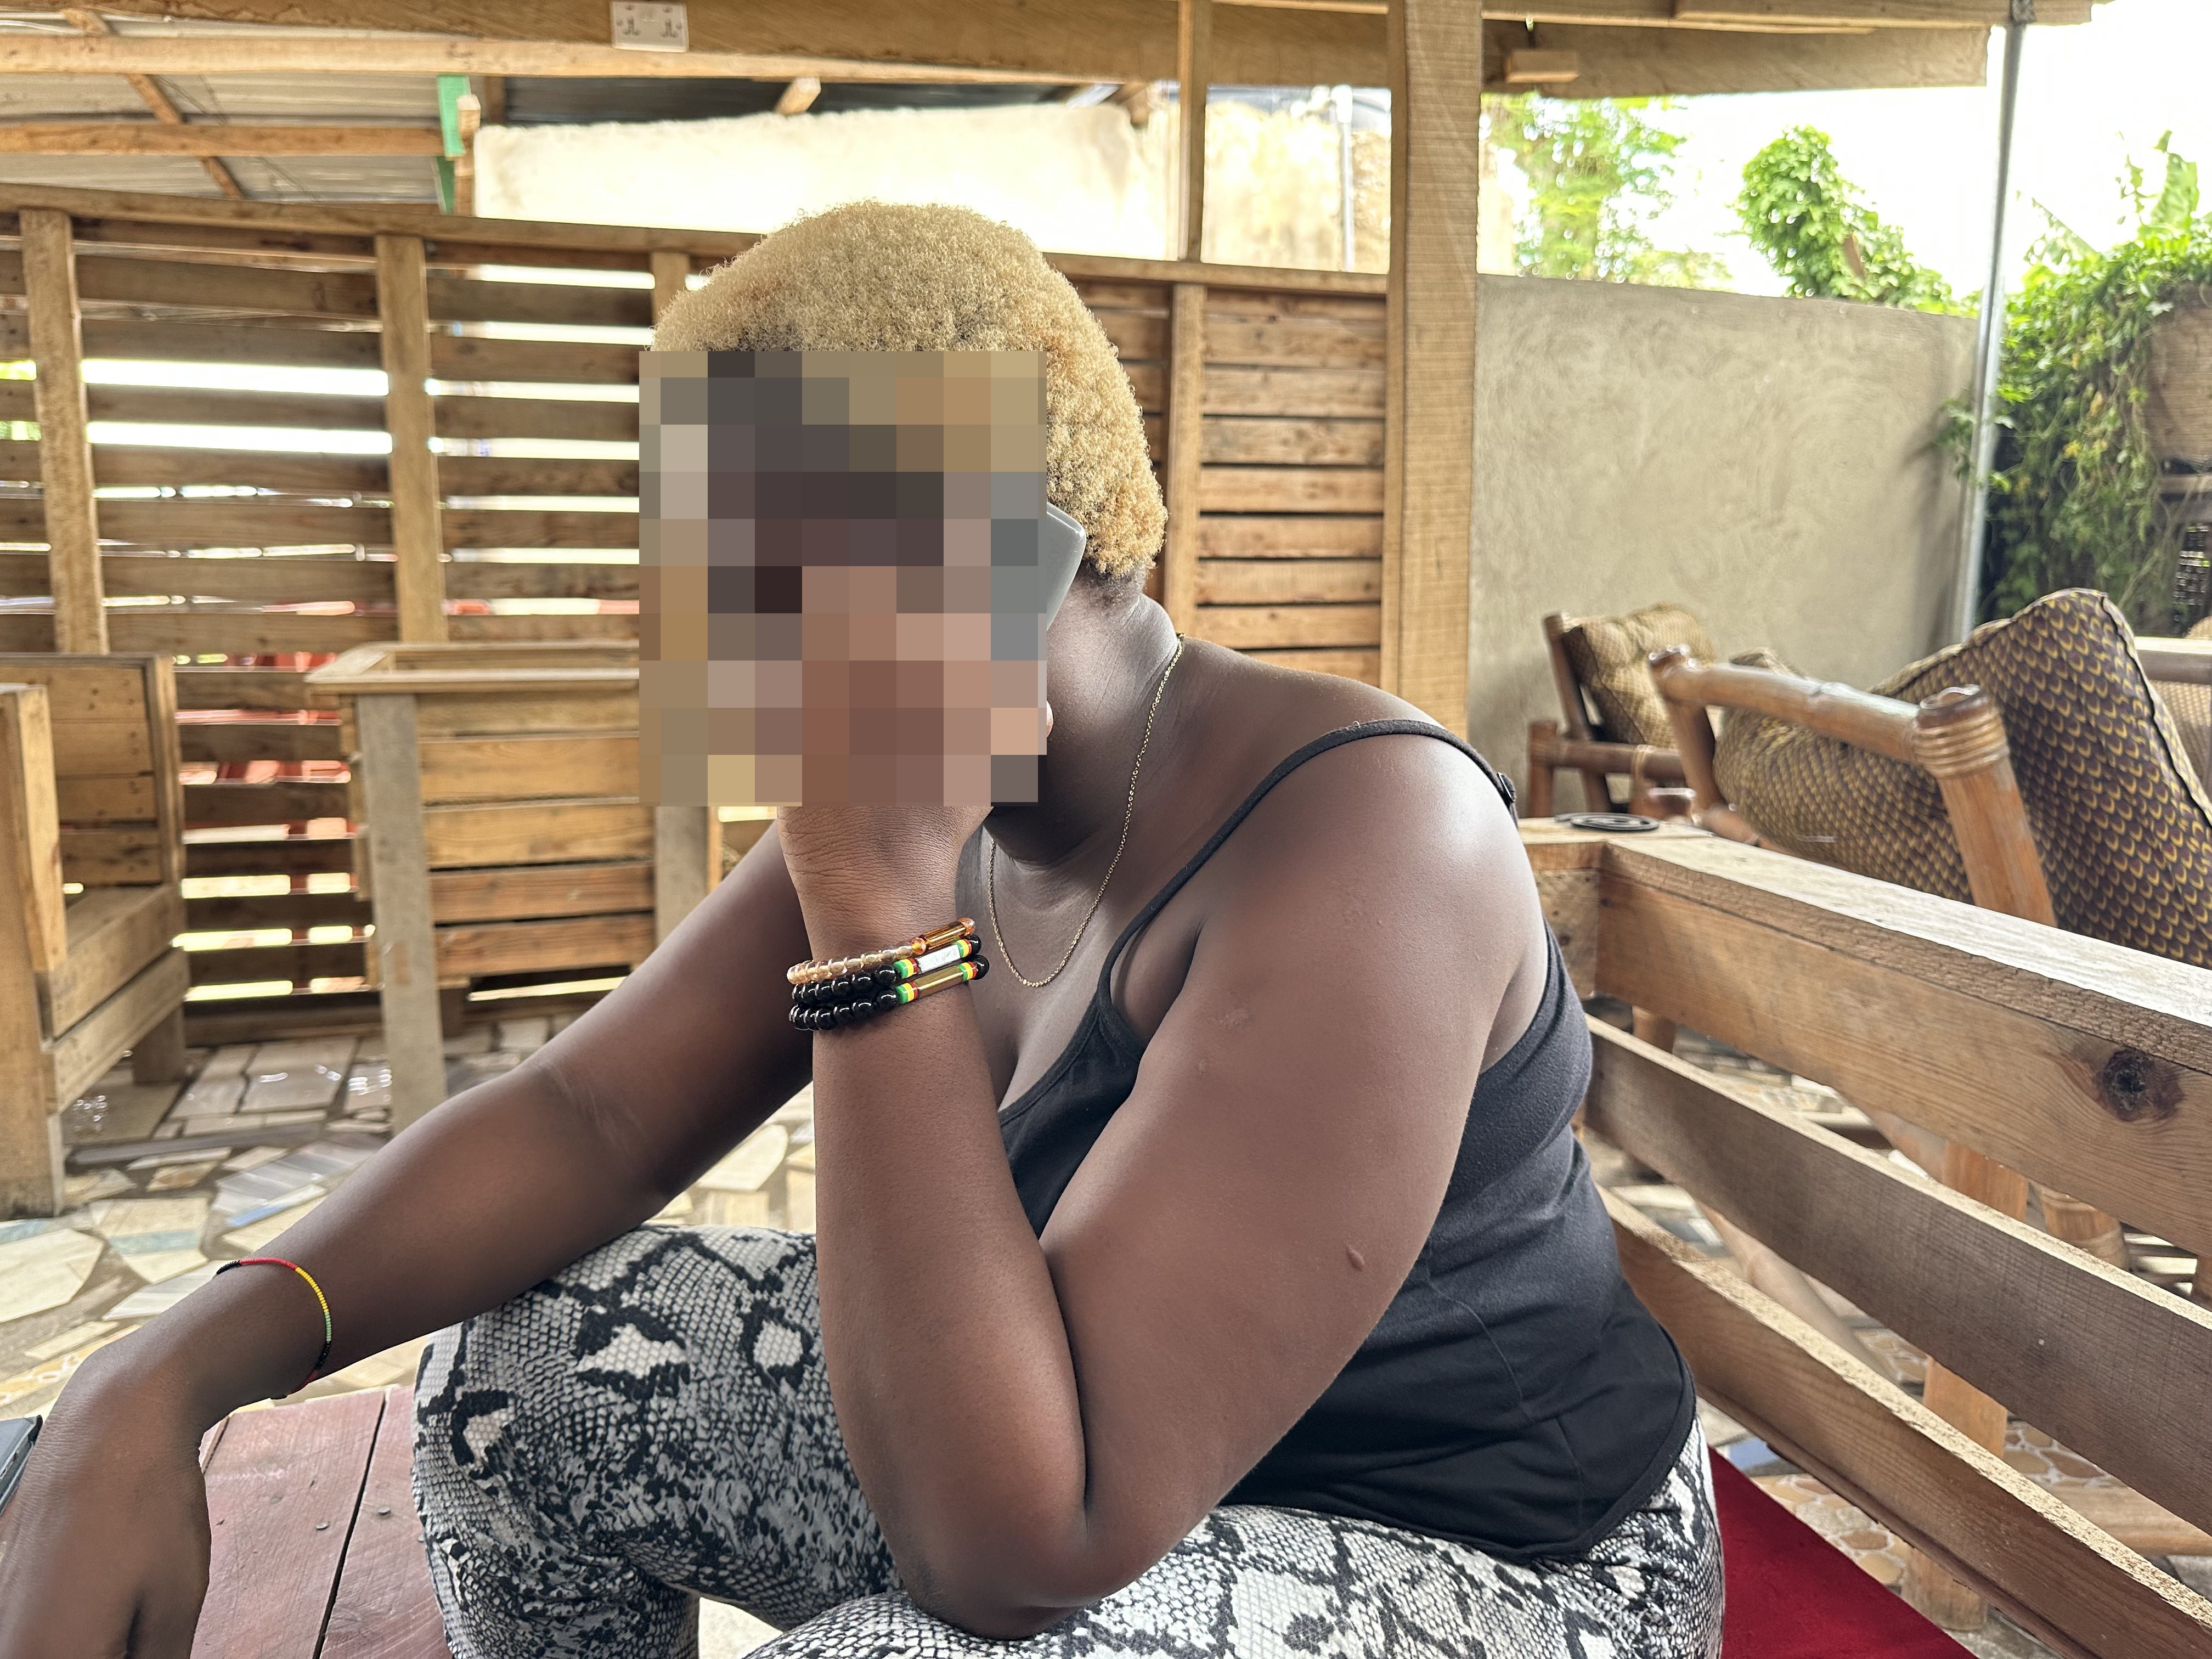 I knew it was a risk A Nigerian migrant sex worker in Ghana Womens Rights Al Jazeera pic pic